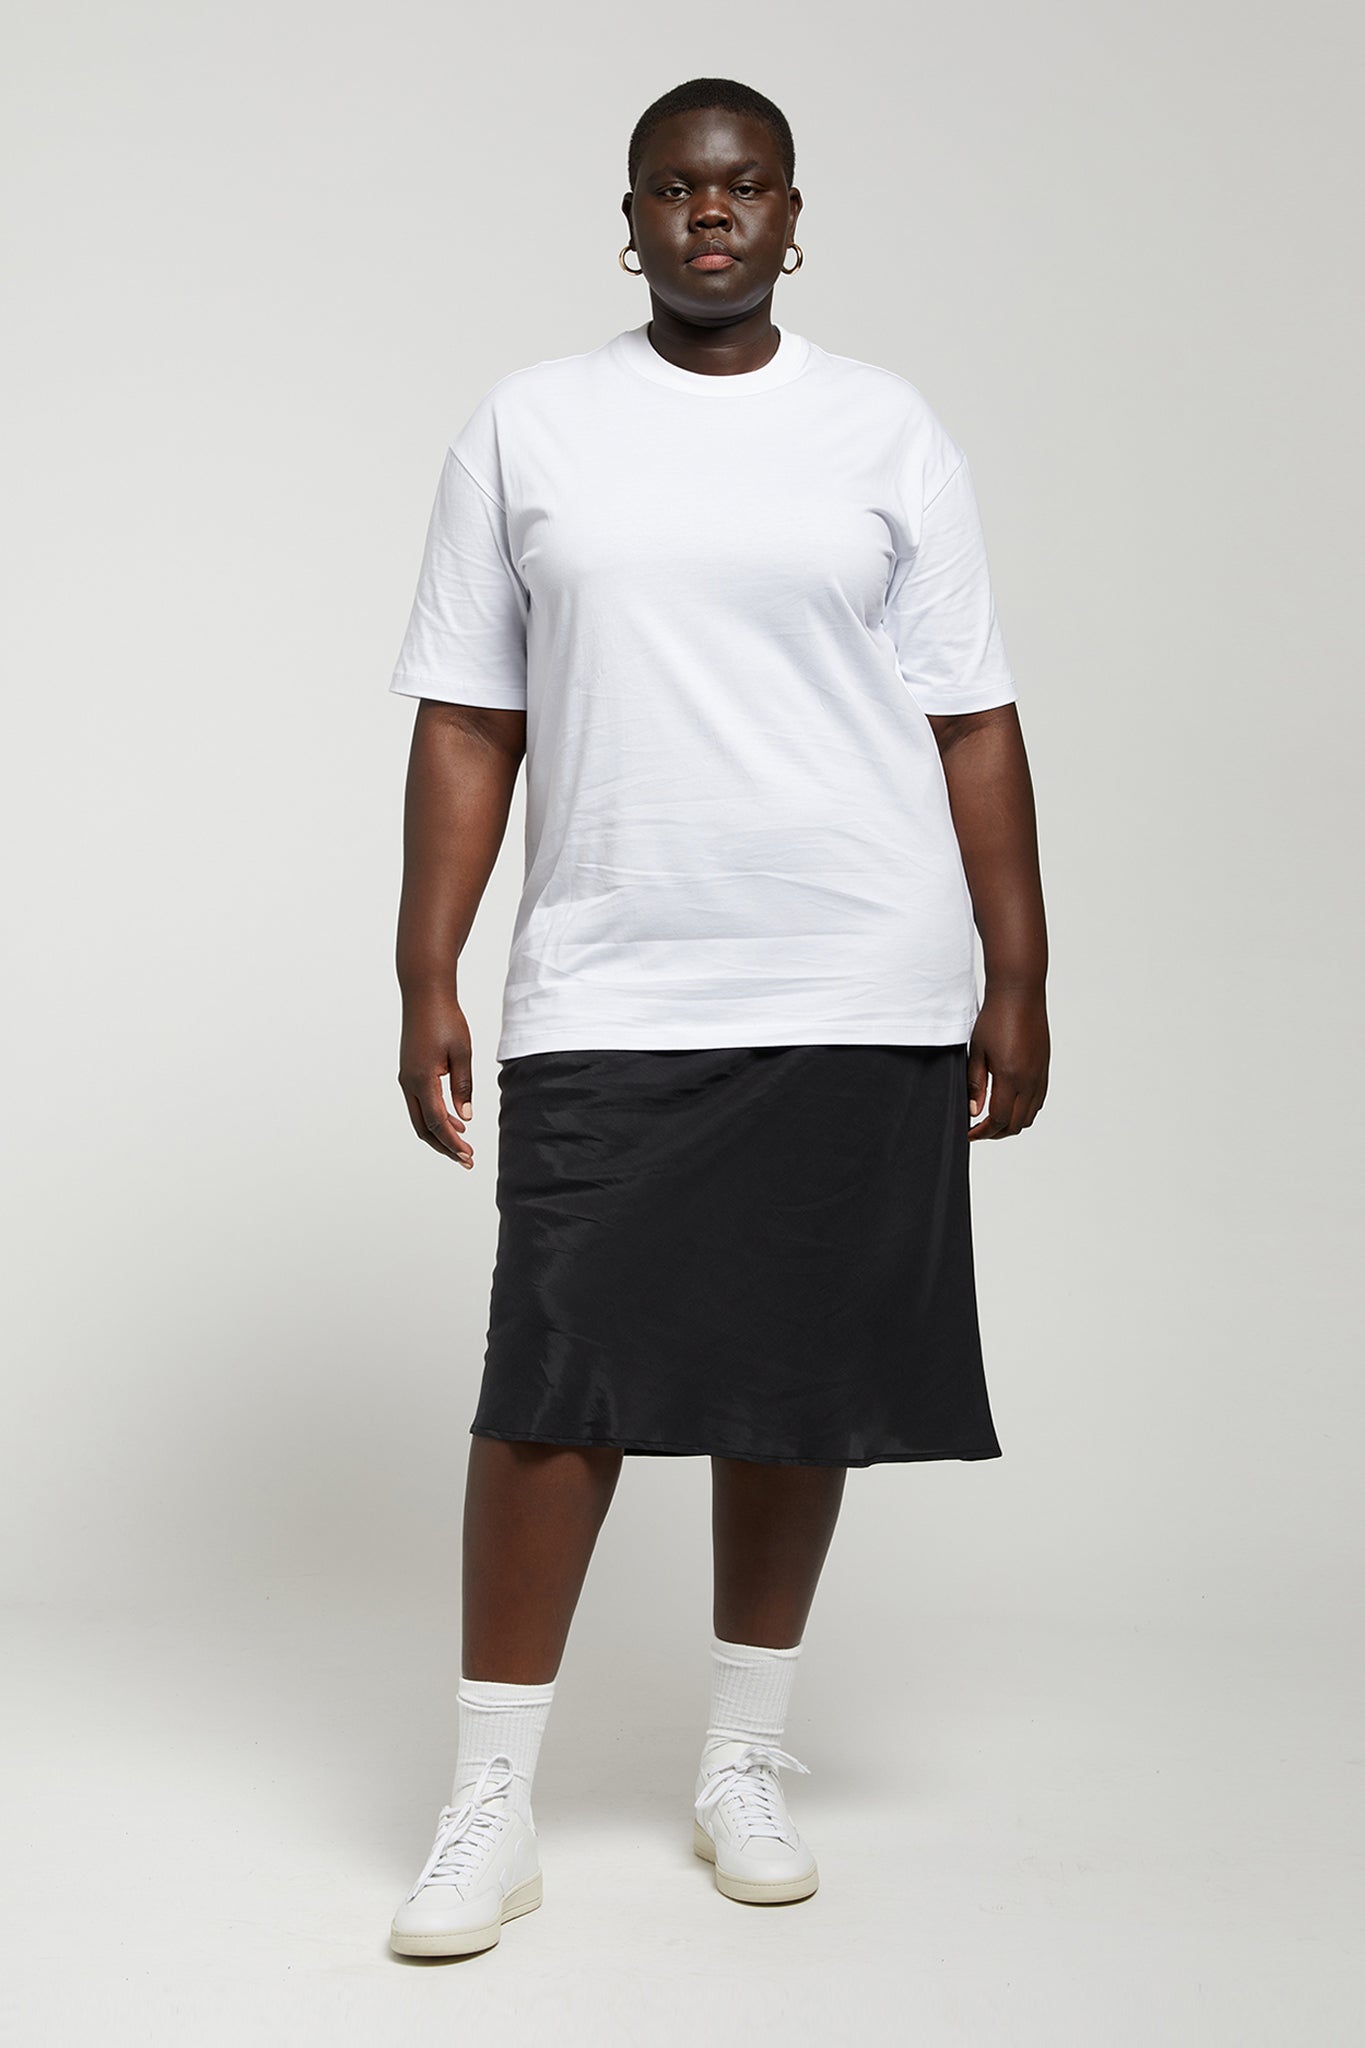 A.65 White High Crew T-Shirt in Organic Cotton